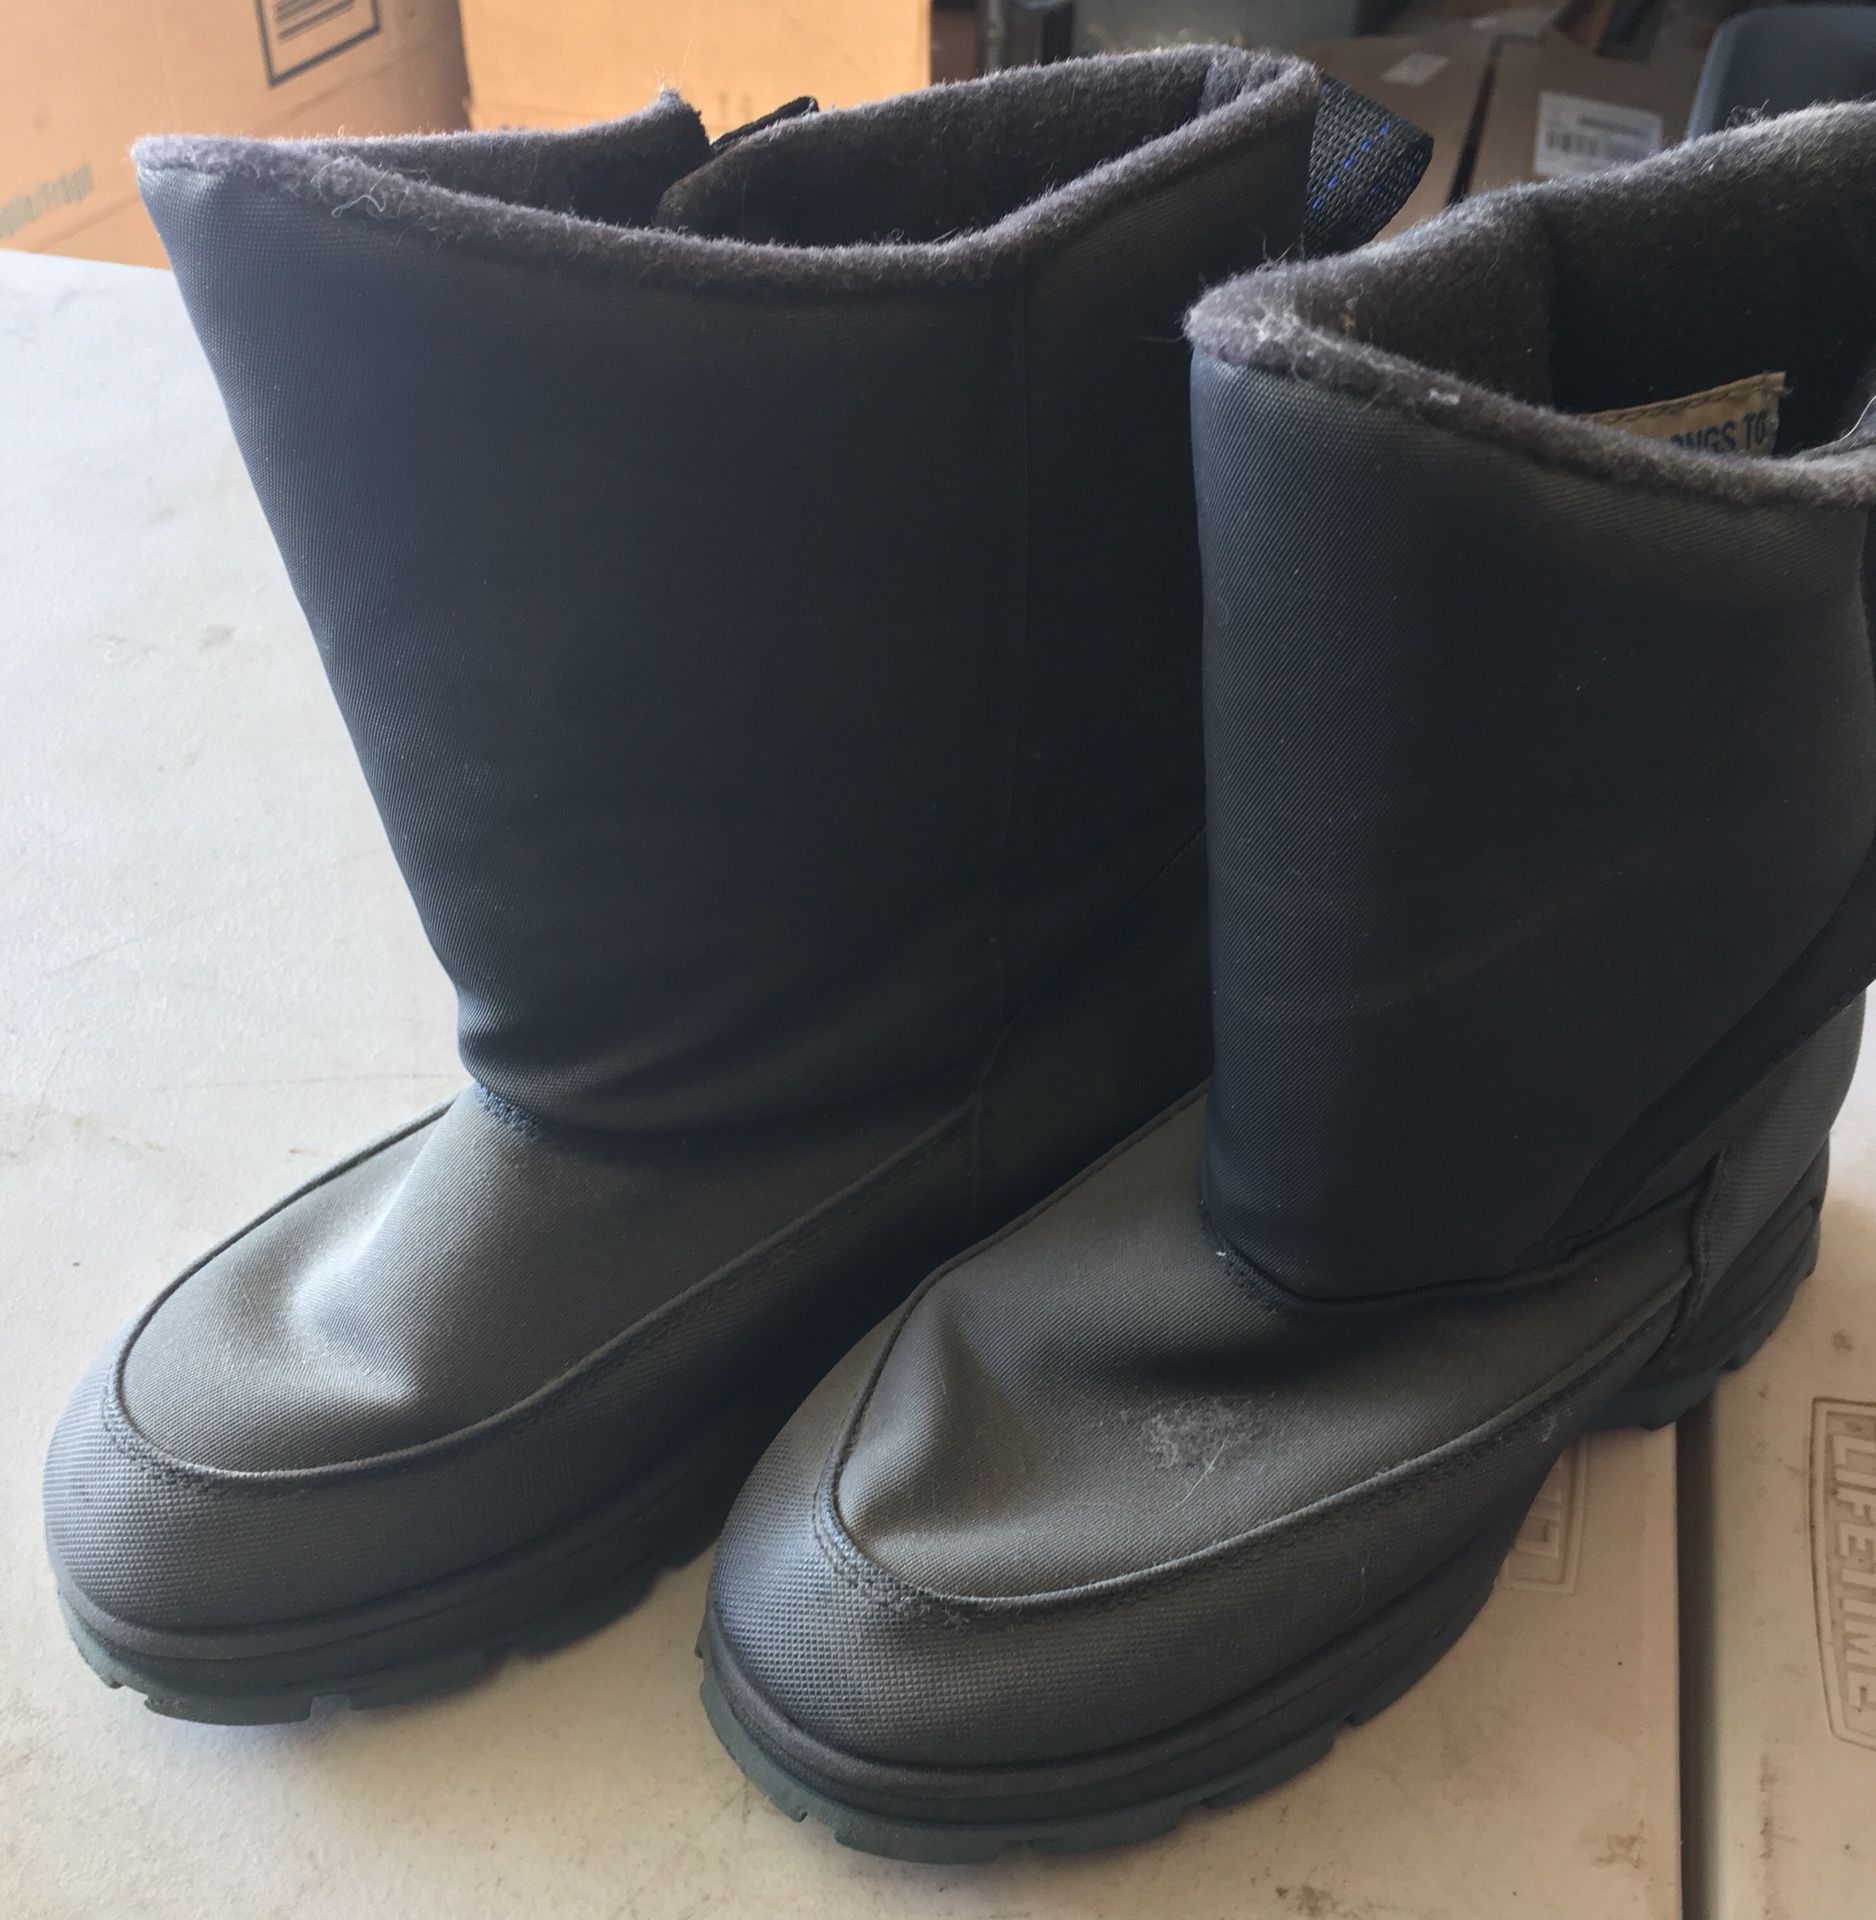 Snow boots kids size 4